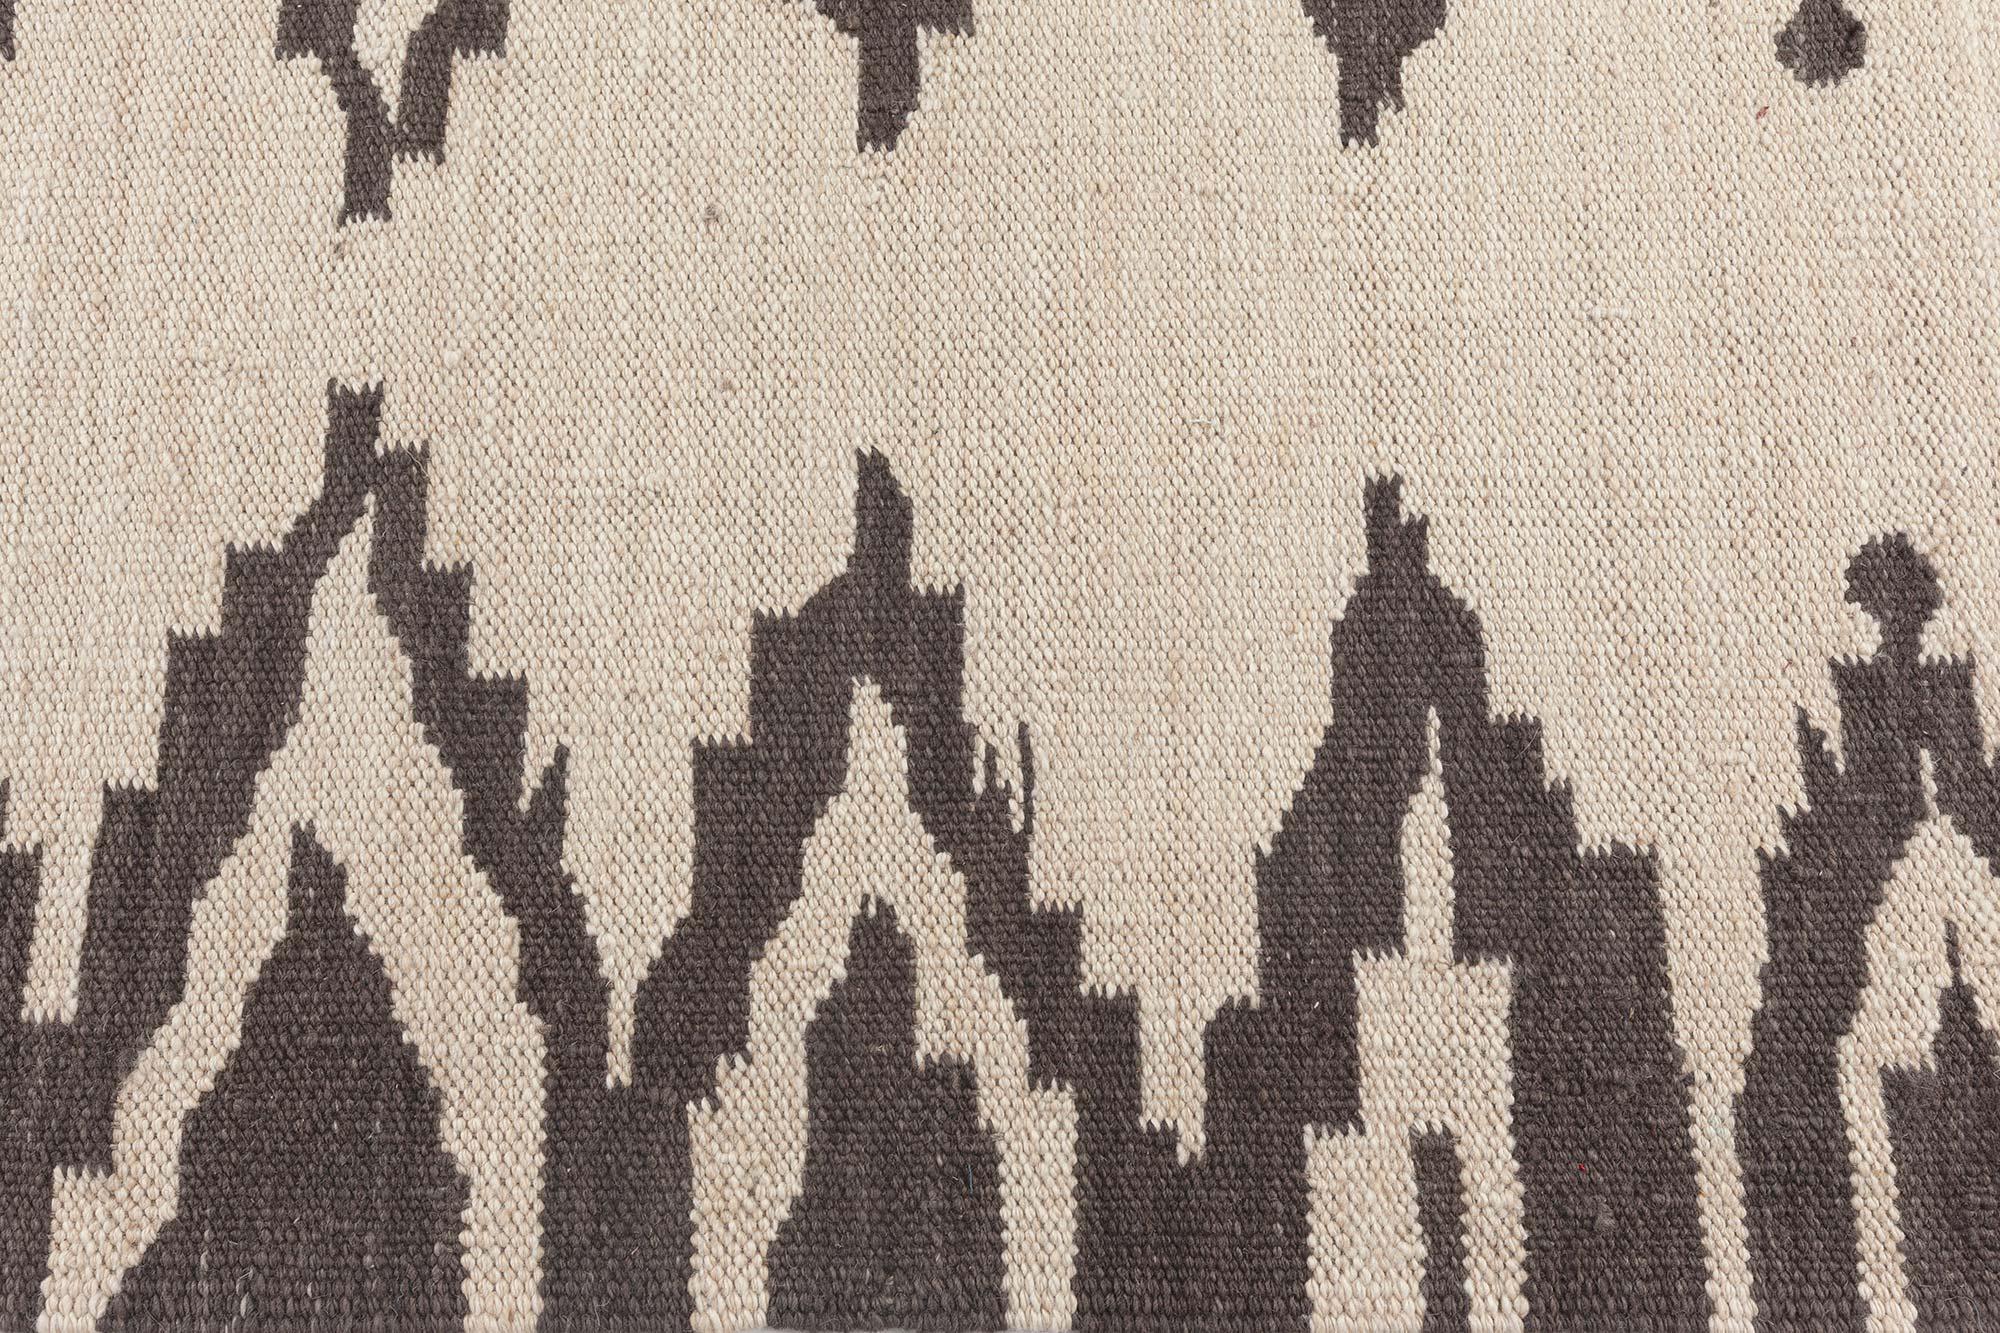 Modern Swedish Flat Weave rug by Doris Leslie Blau
Size: 10'2